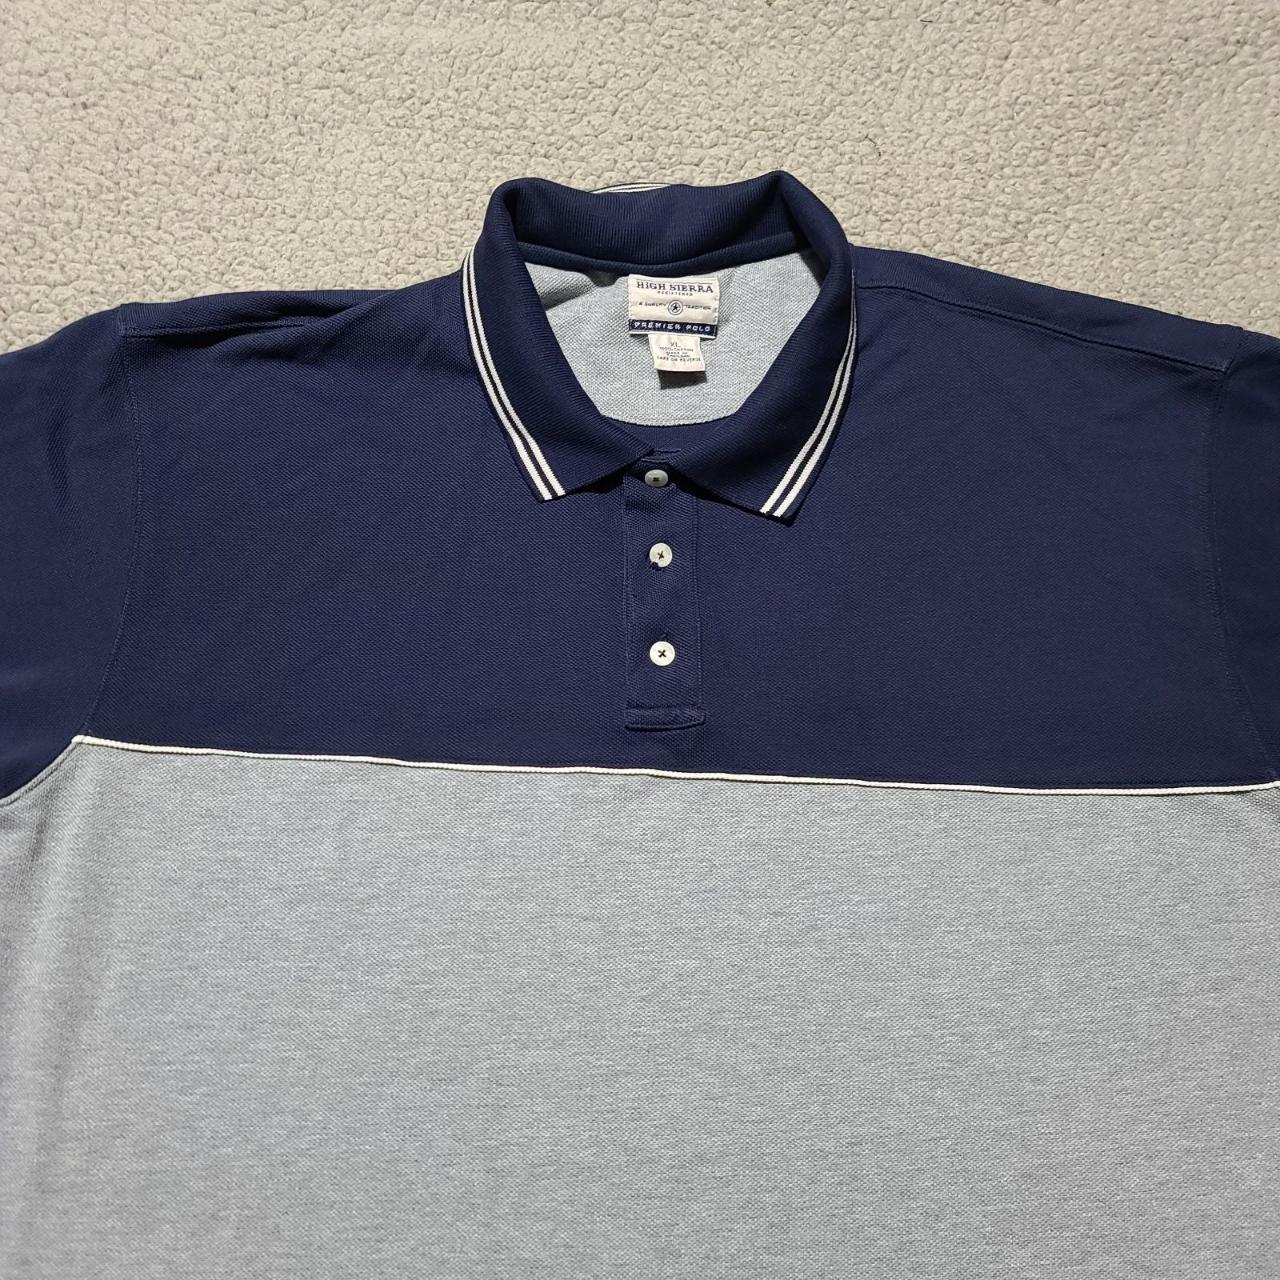 High Sierra Premier Polo Men's Blue Gray Polo Shirt... - Depop